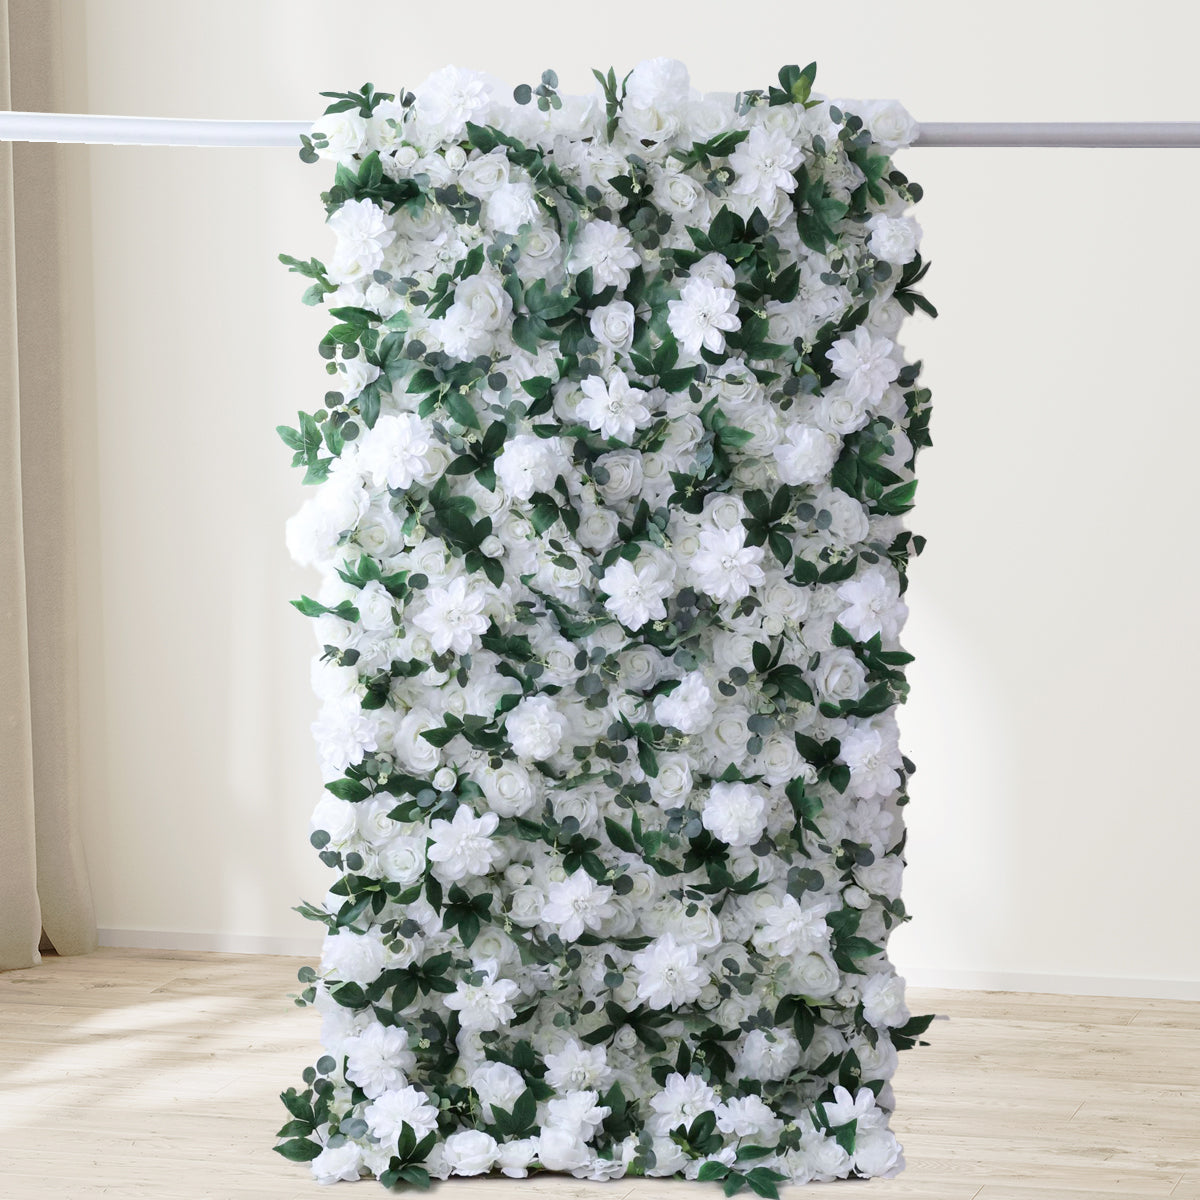 3D Artificial Flower Wall Arrangement Wedding Party Birthday Backdrop Decor HQ1333